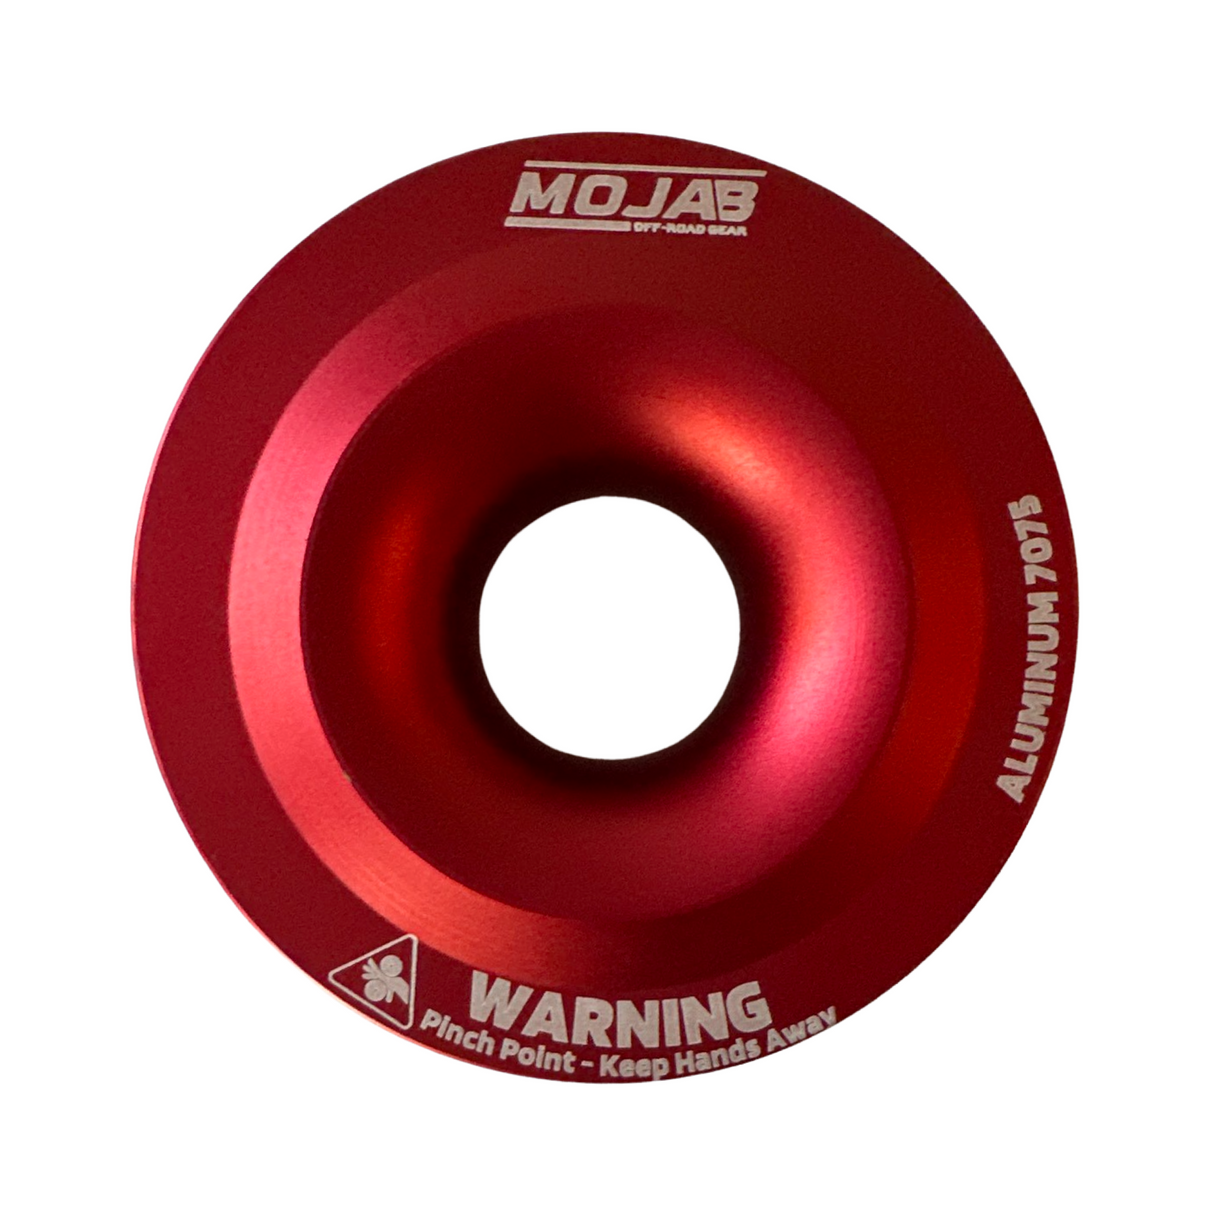 XL Snatch ring (diameter 4.7'').